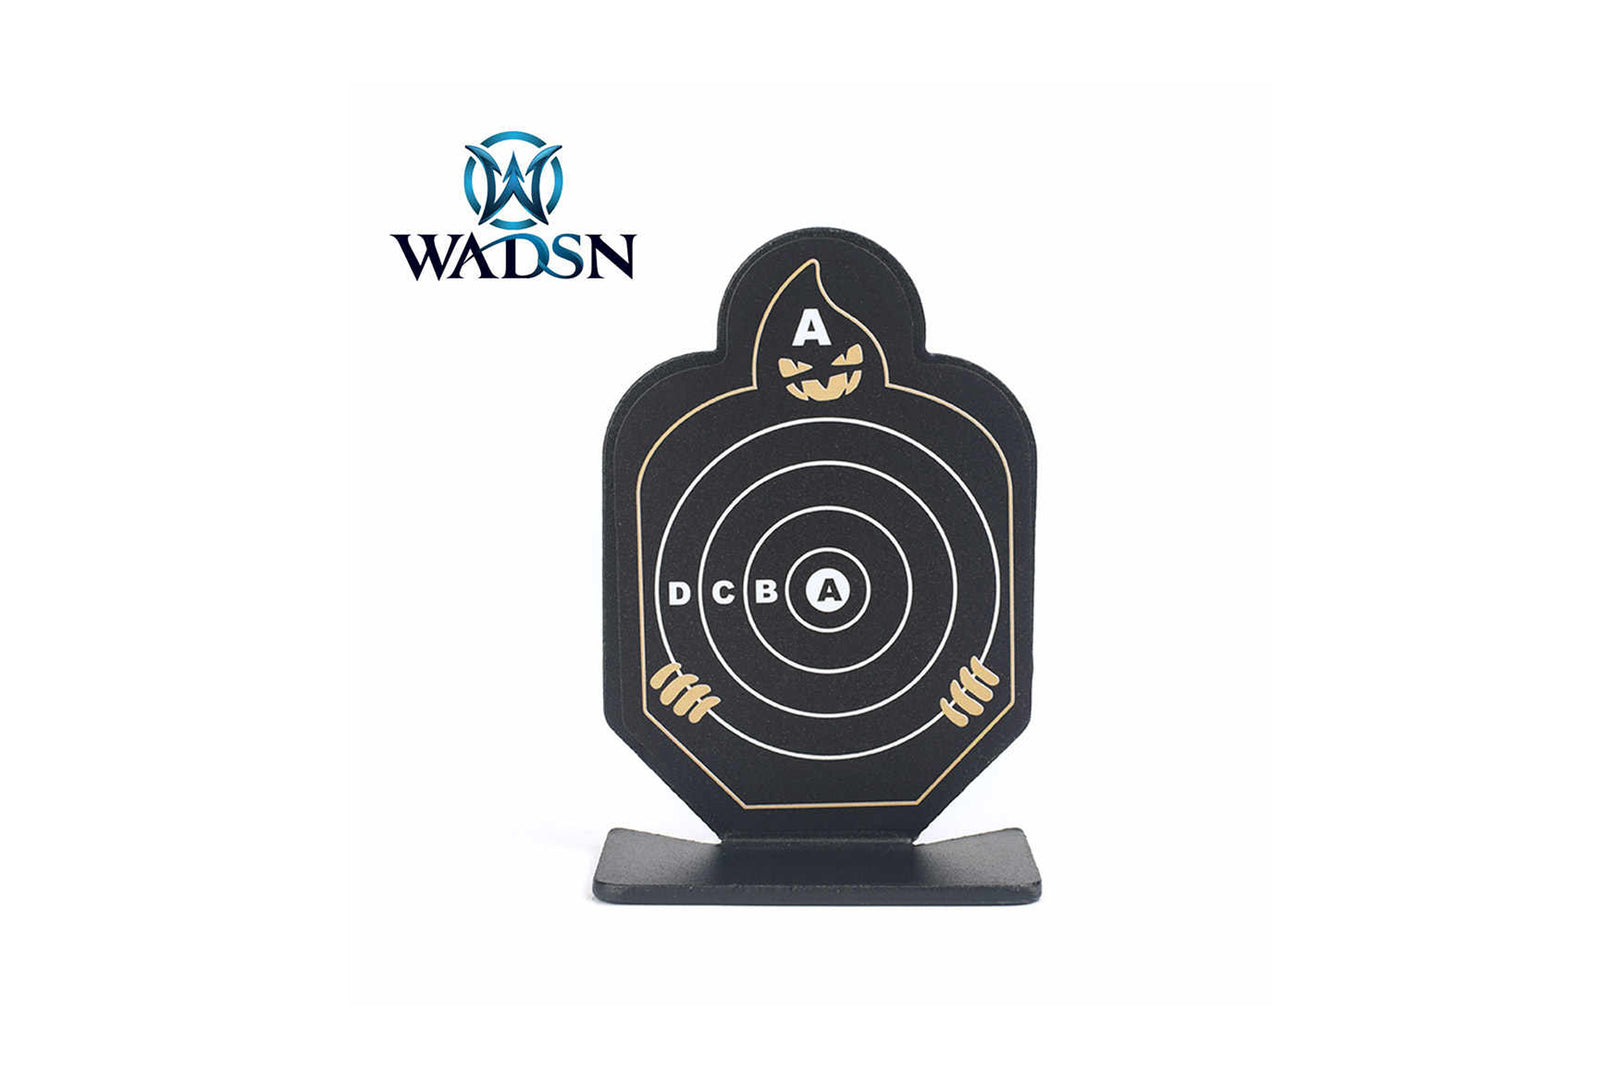 WADSN practice targets